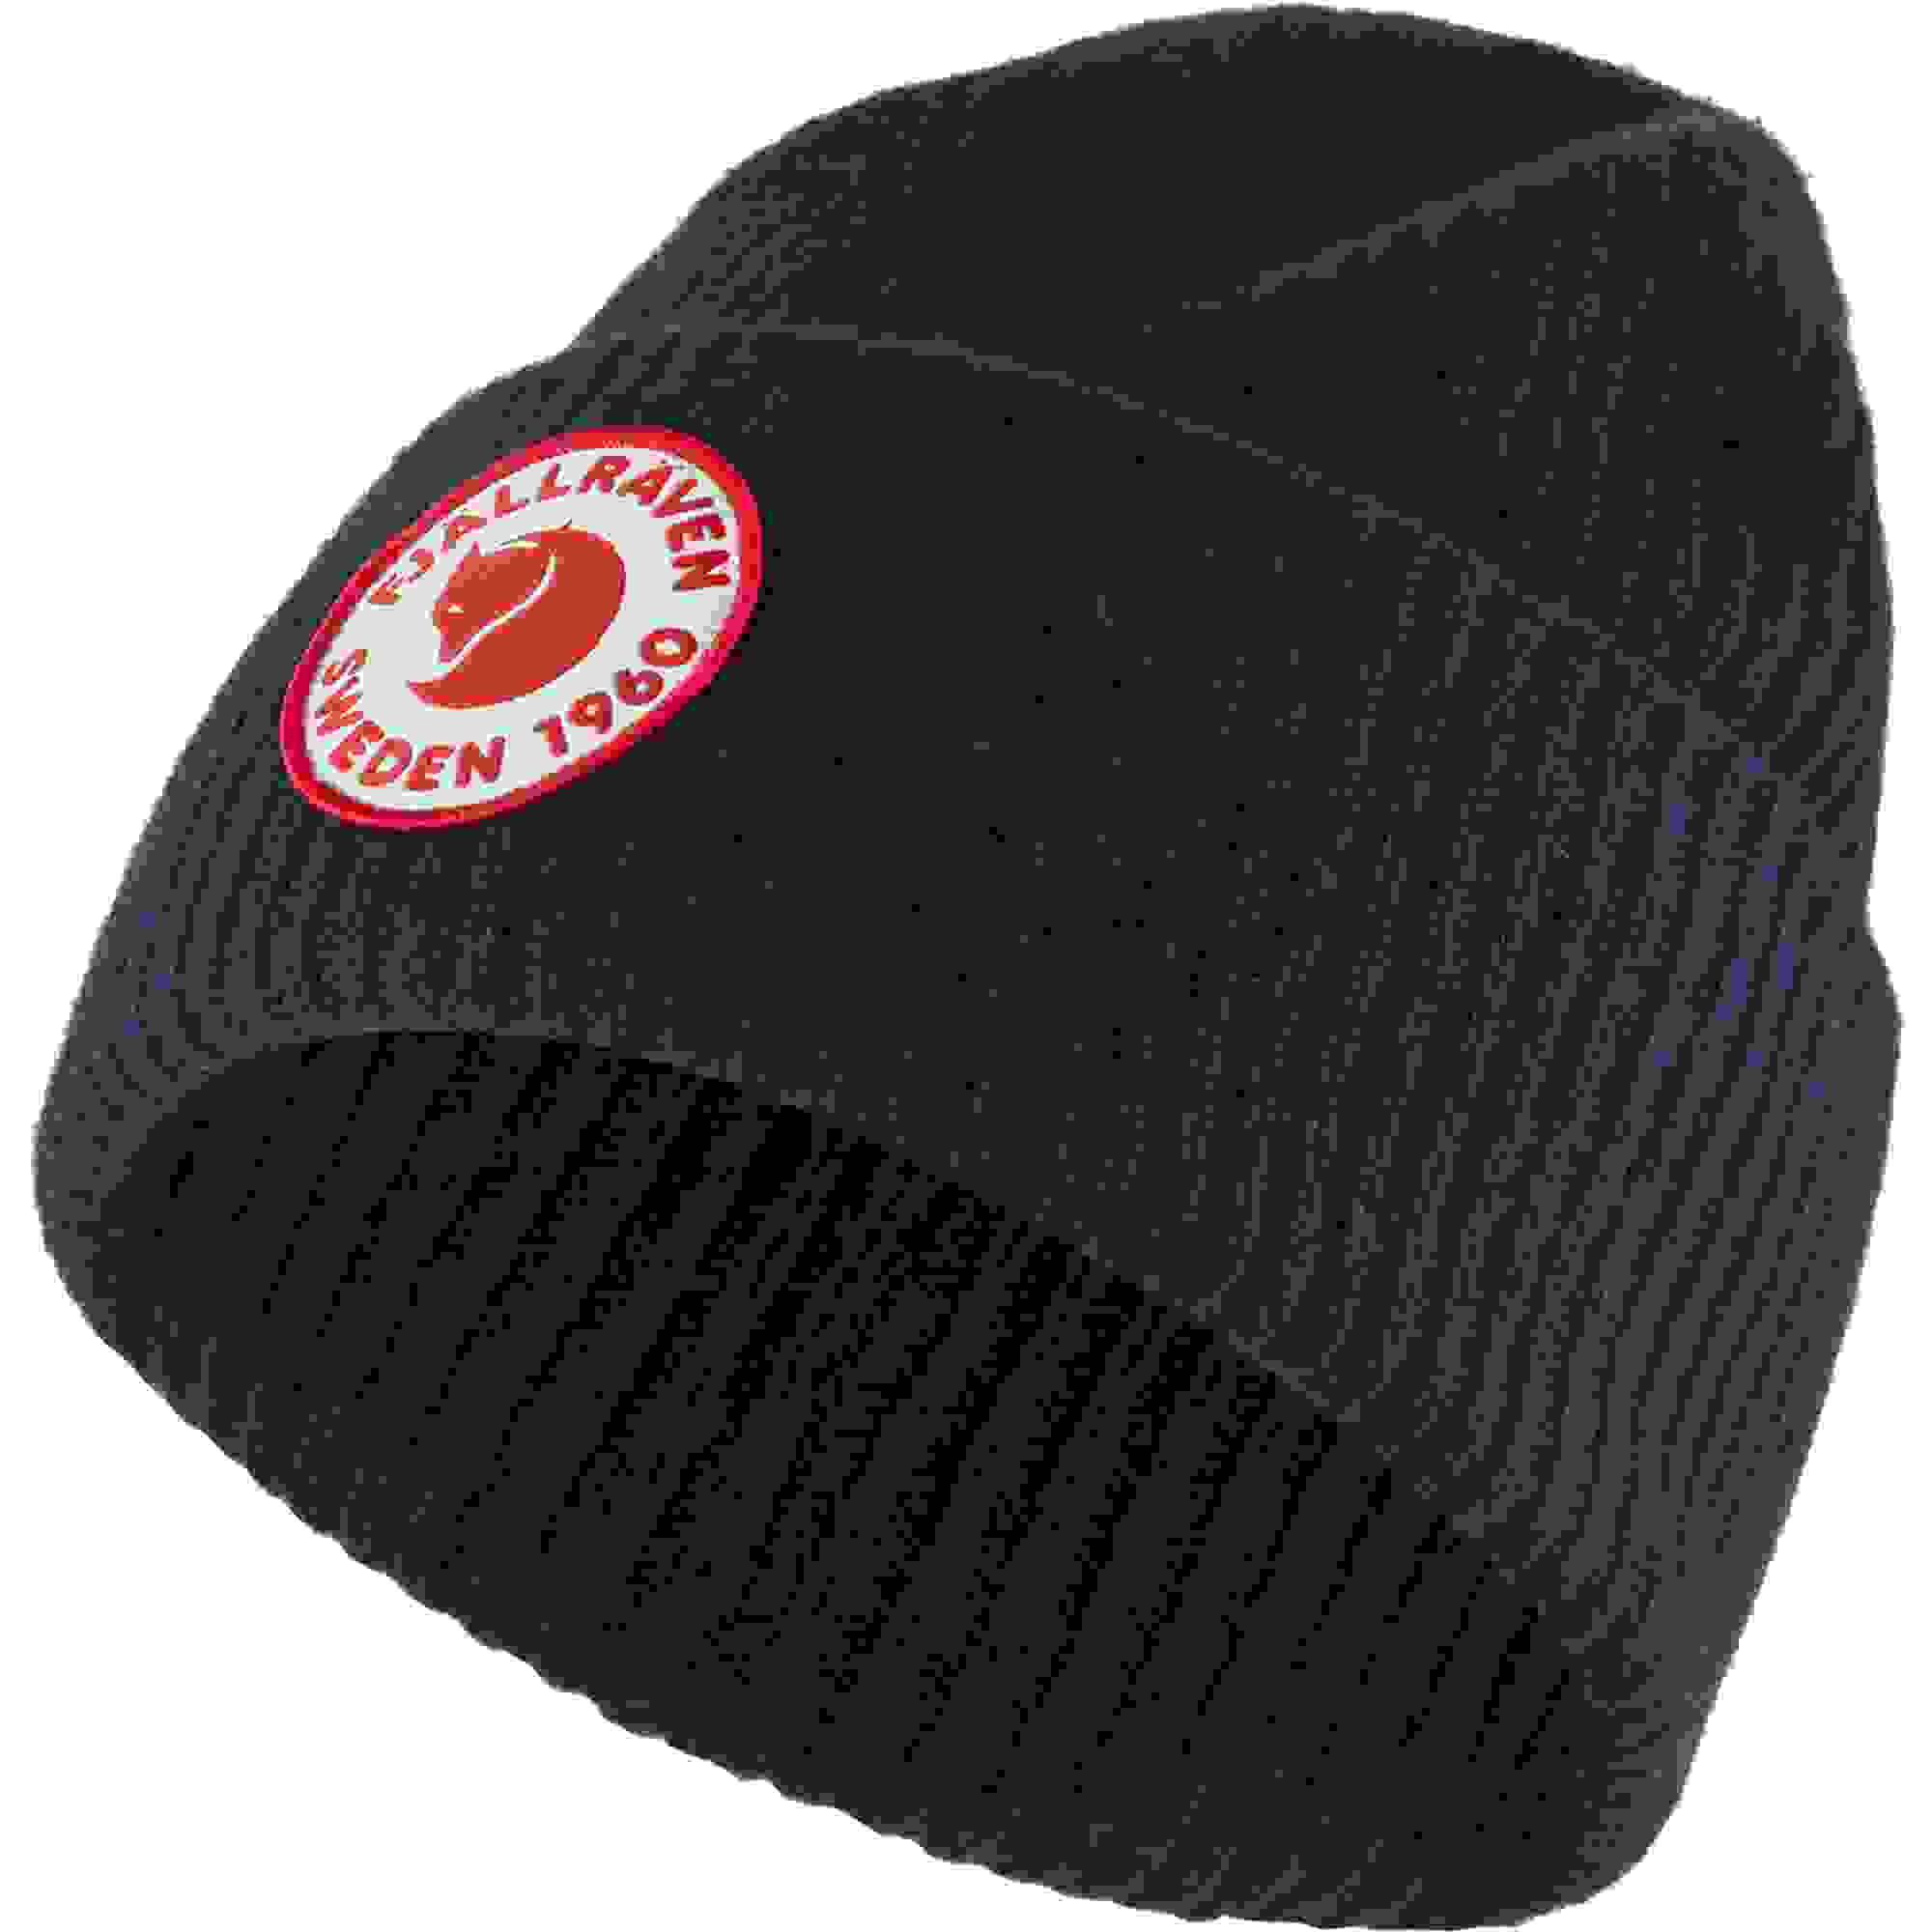 Fjallraven Unisex 1960 Logo Hat Cap